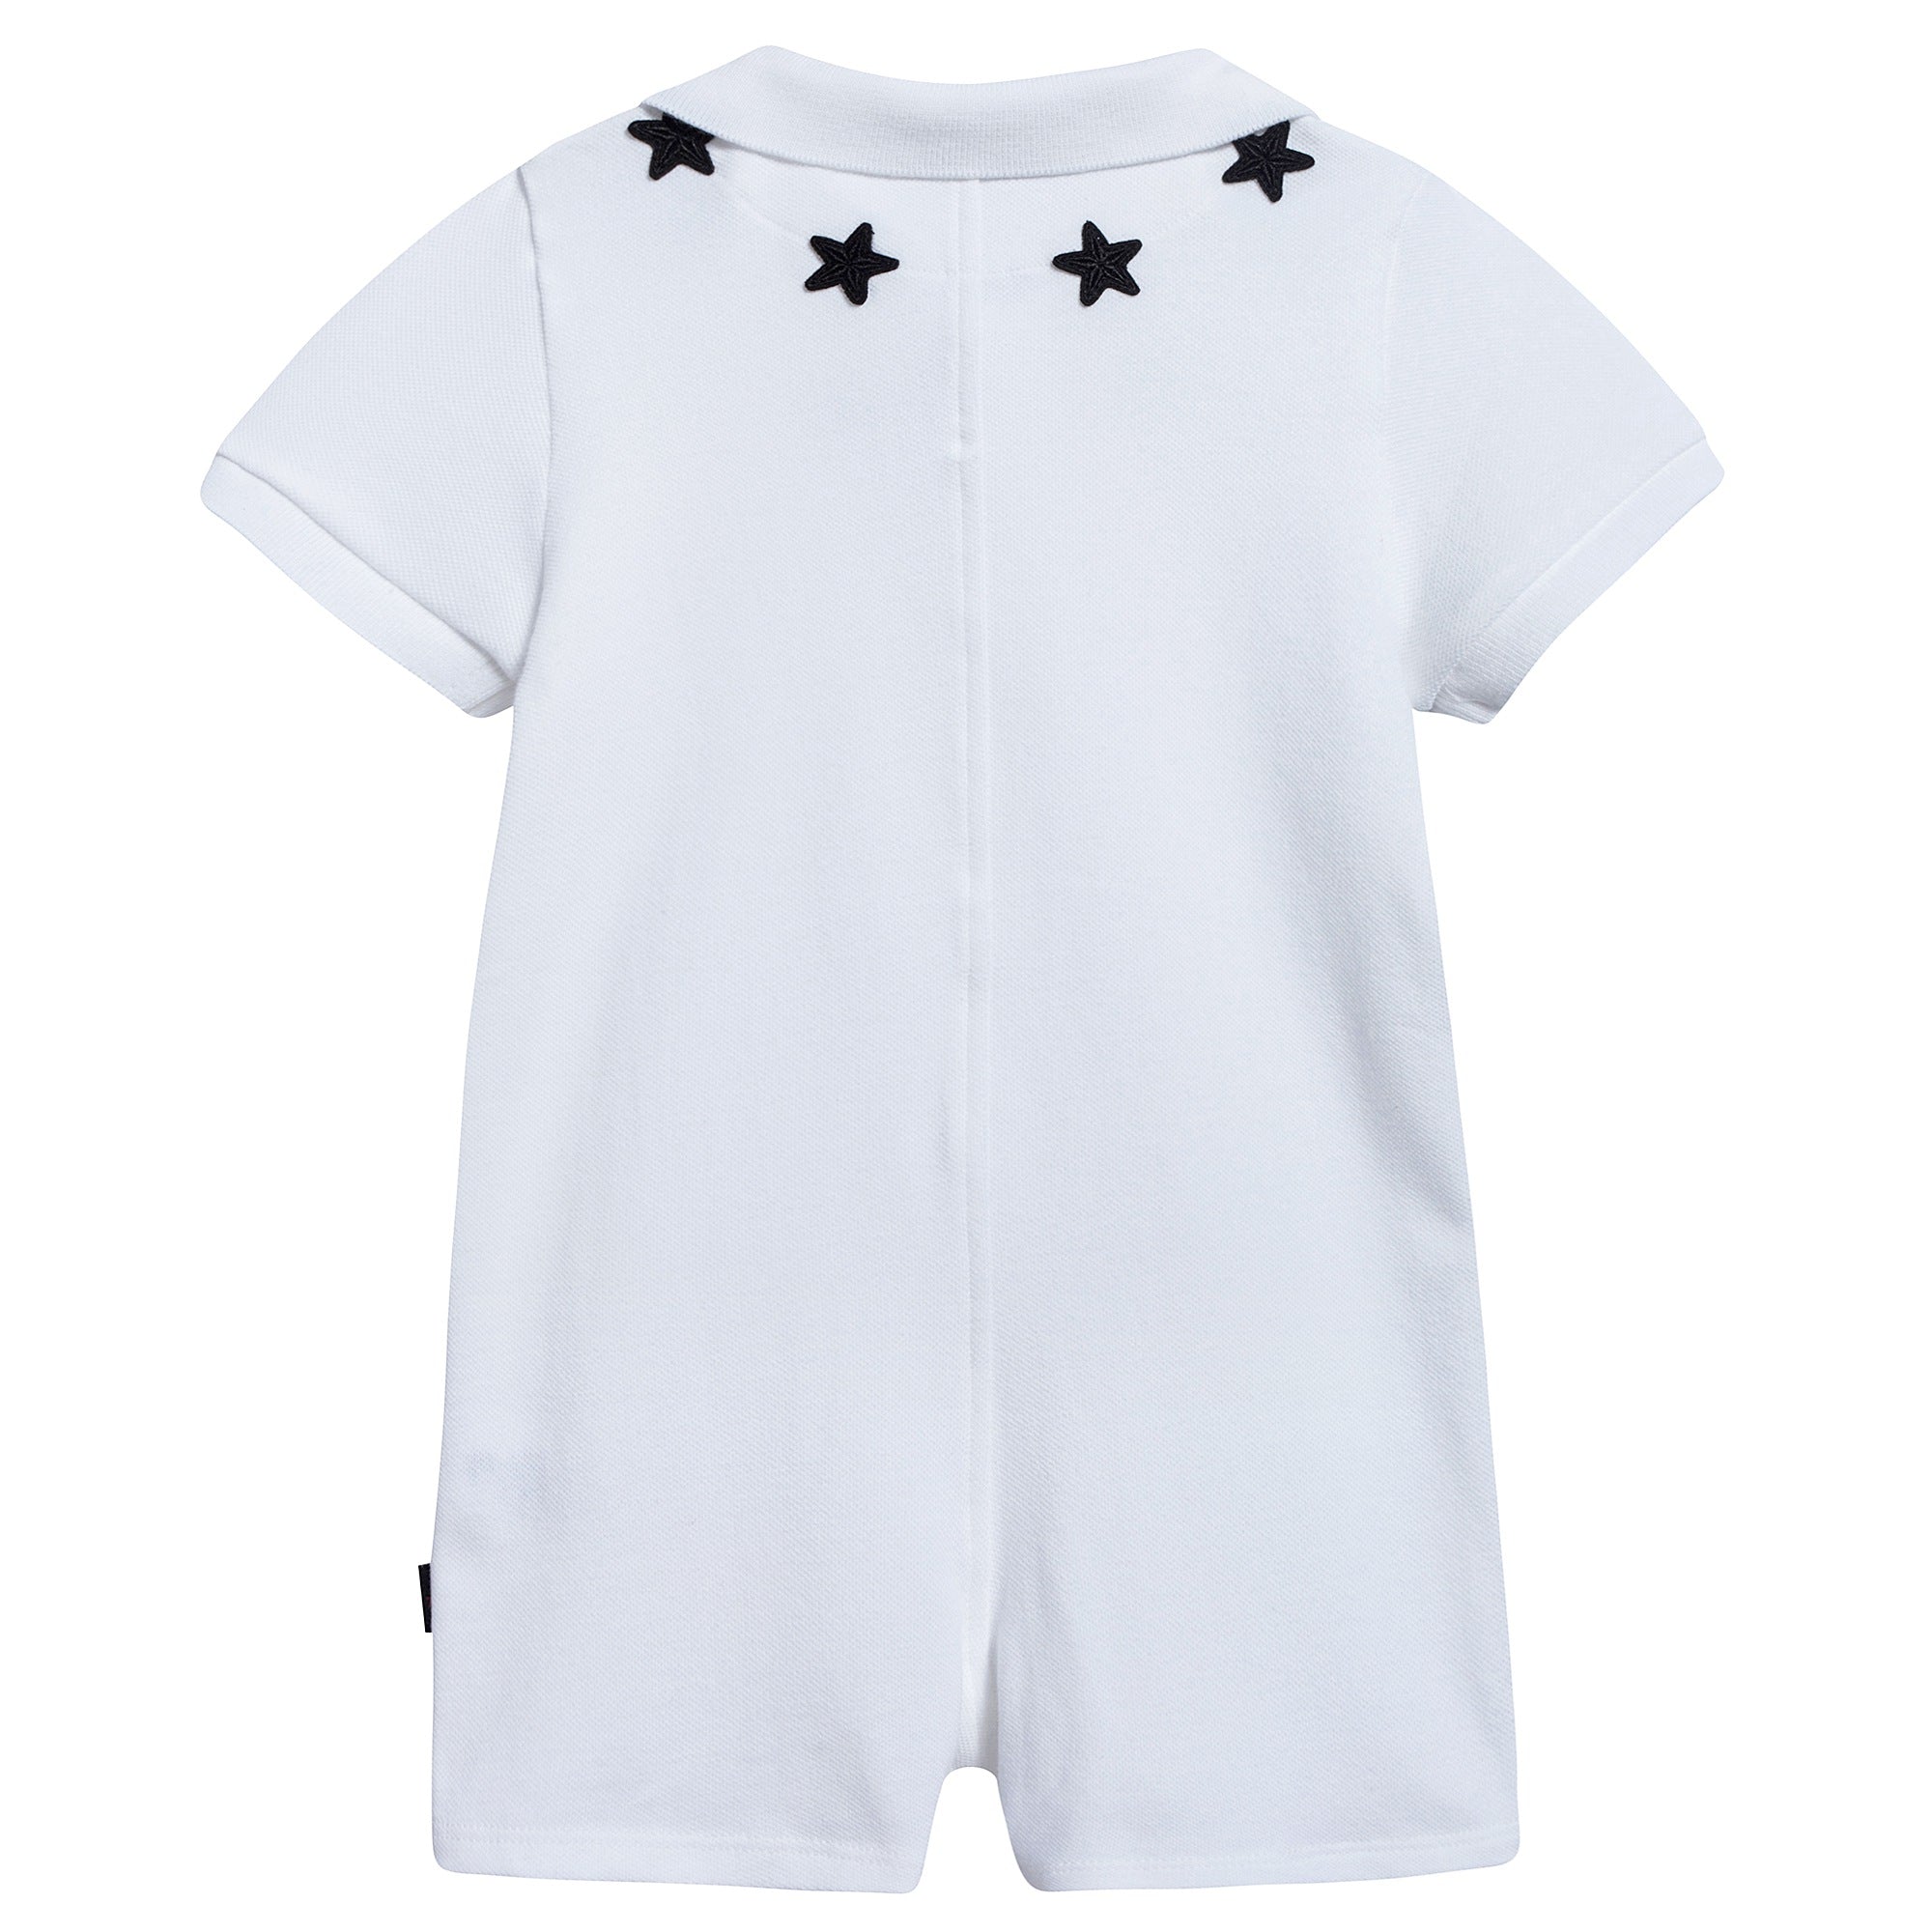 Baby White Cotton "Star" Babysuit